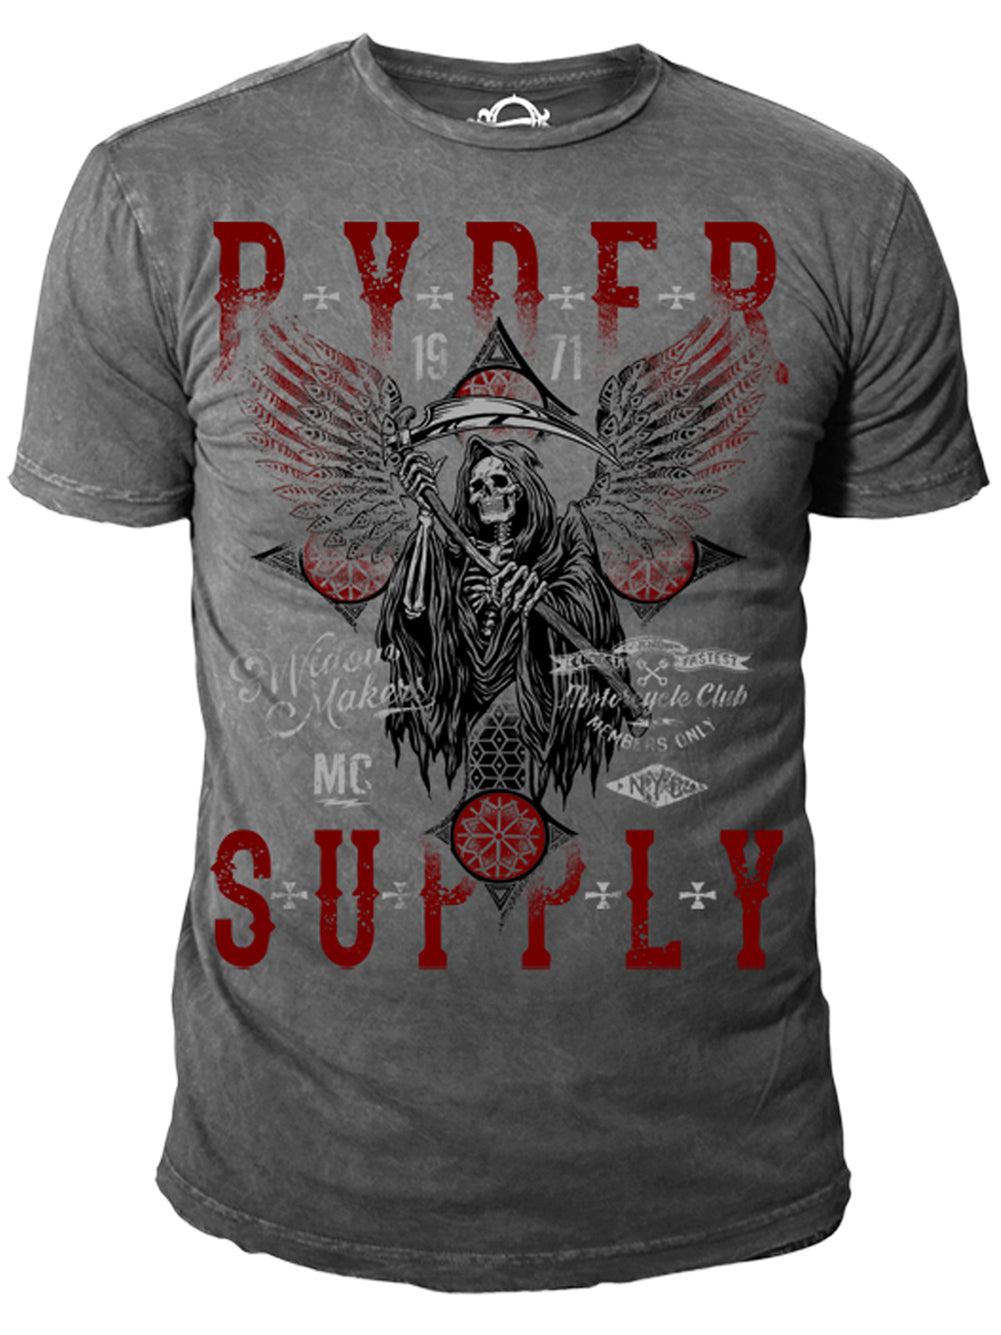 Ryder Supply Clothing - Cross Mens T-shirt (Charcoal Grey)